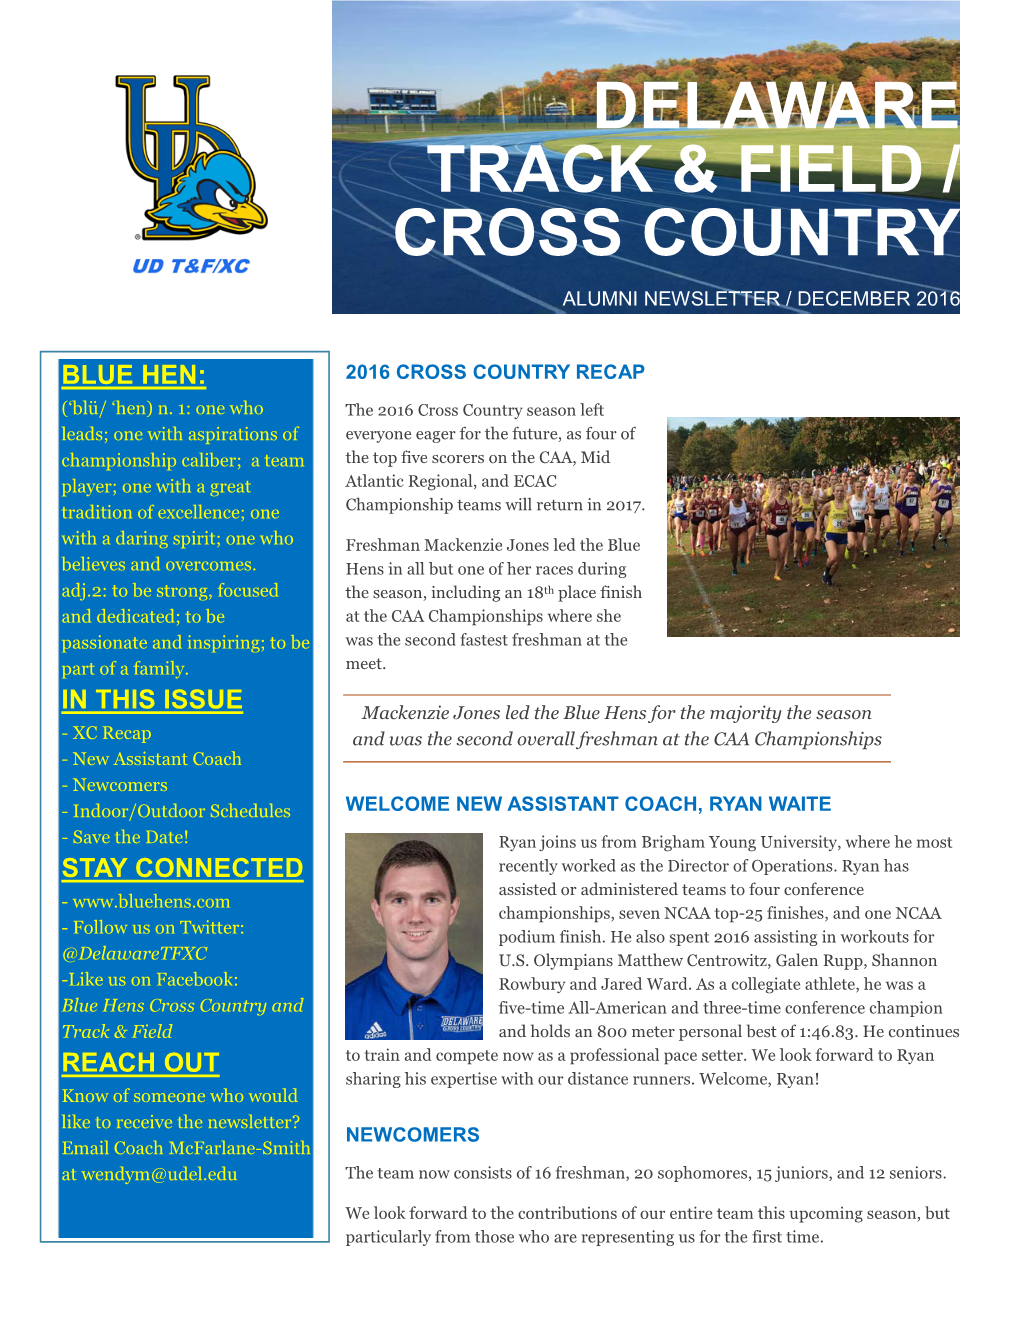 Delaware Track & Field / Cross Country